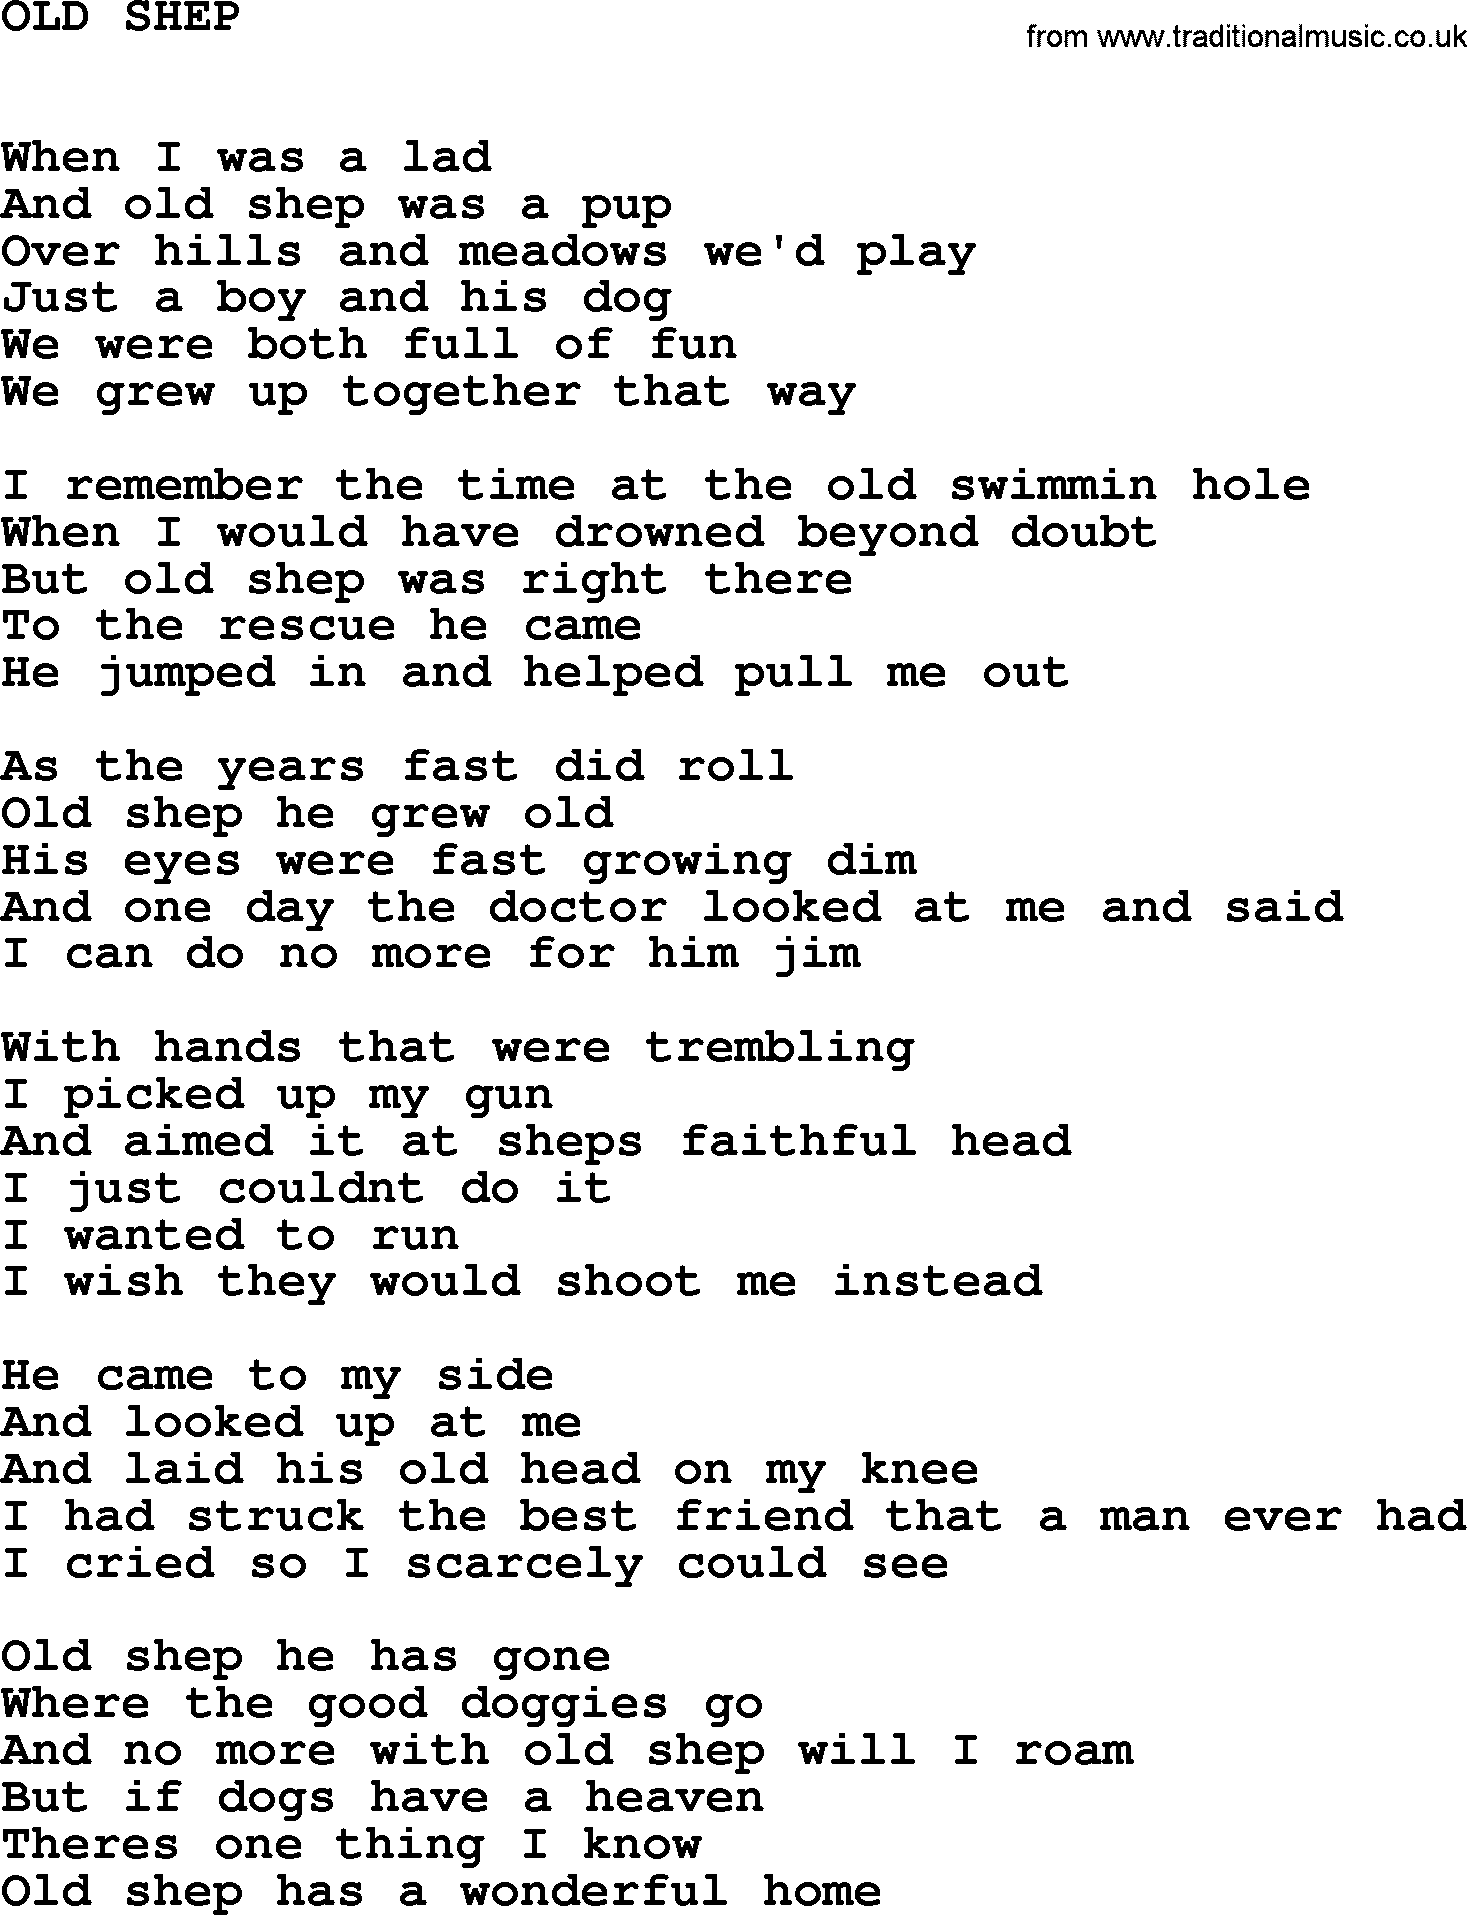 Johnny Cash song Old Shep.txt lyrics